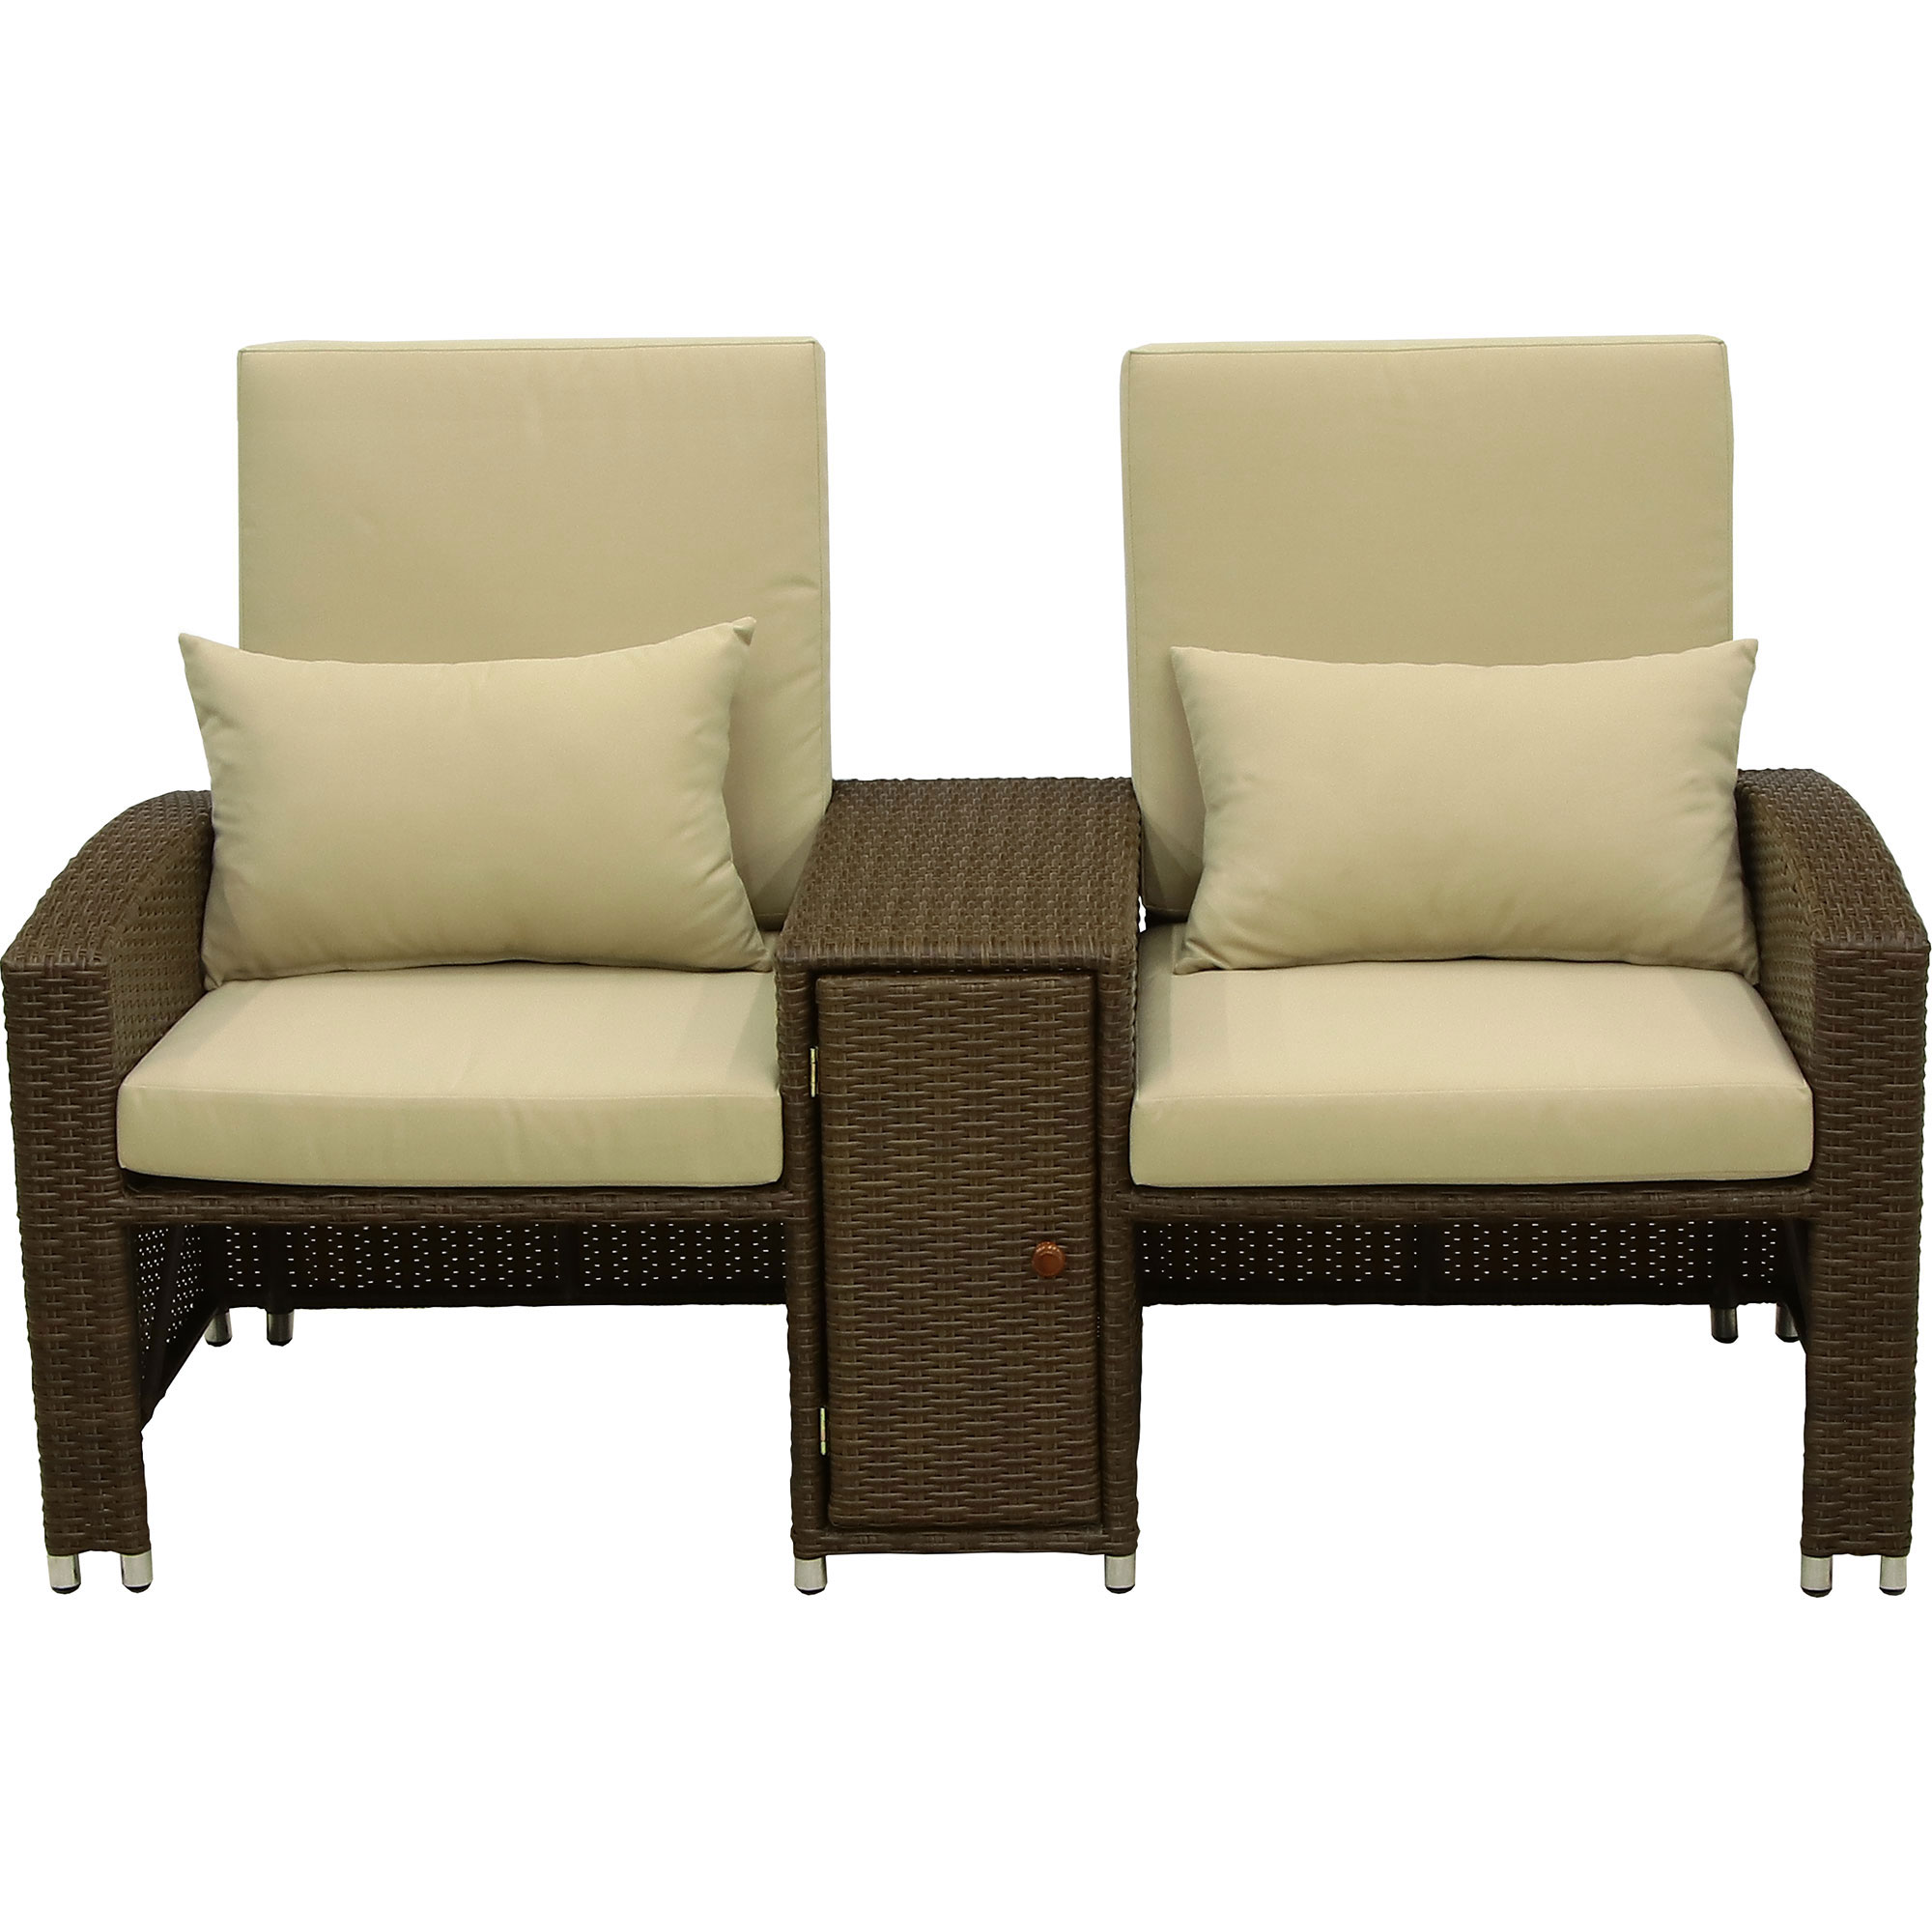 Комплект мебели Ronica Deli коричневый 4 предмета, цвет светло-коричневый, размер 74х164х100 - фото 3